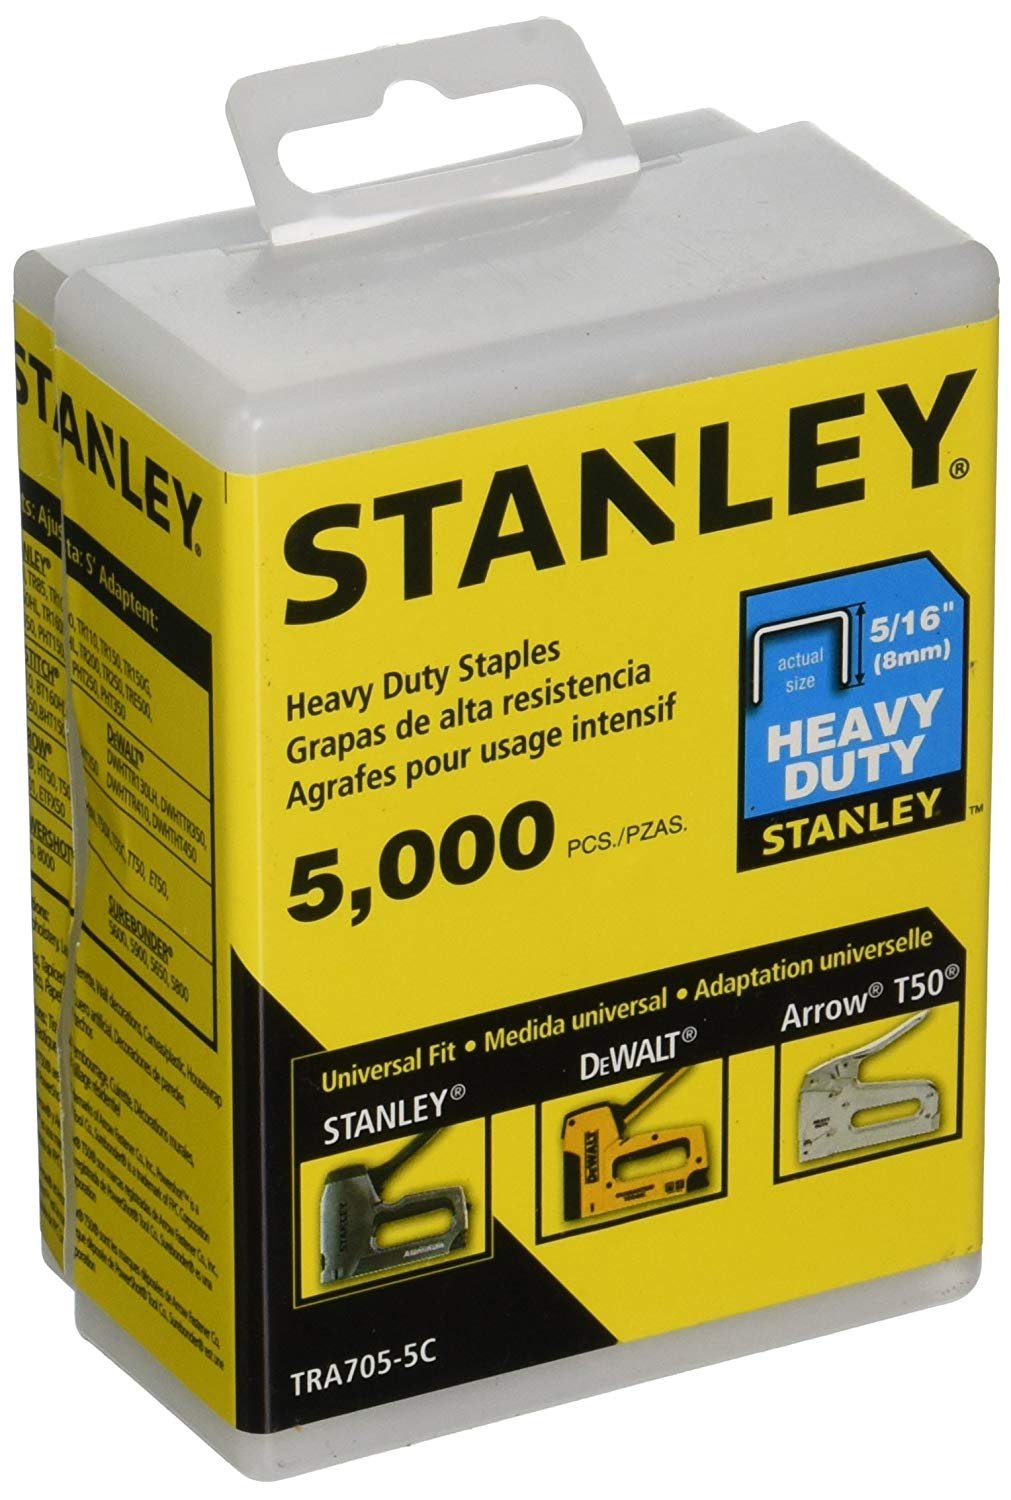 STANLEY TRA705-5C  -  5,000 PC 5/16 IN HEAVY DUTY STAPLES